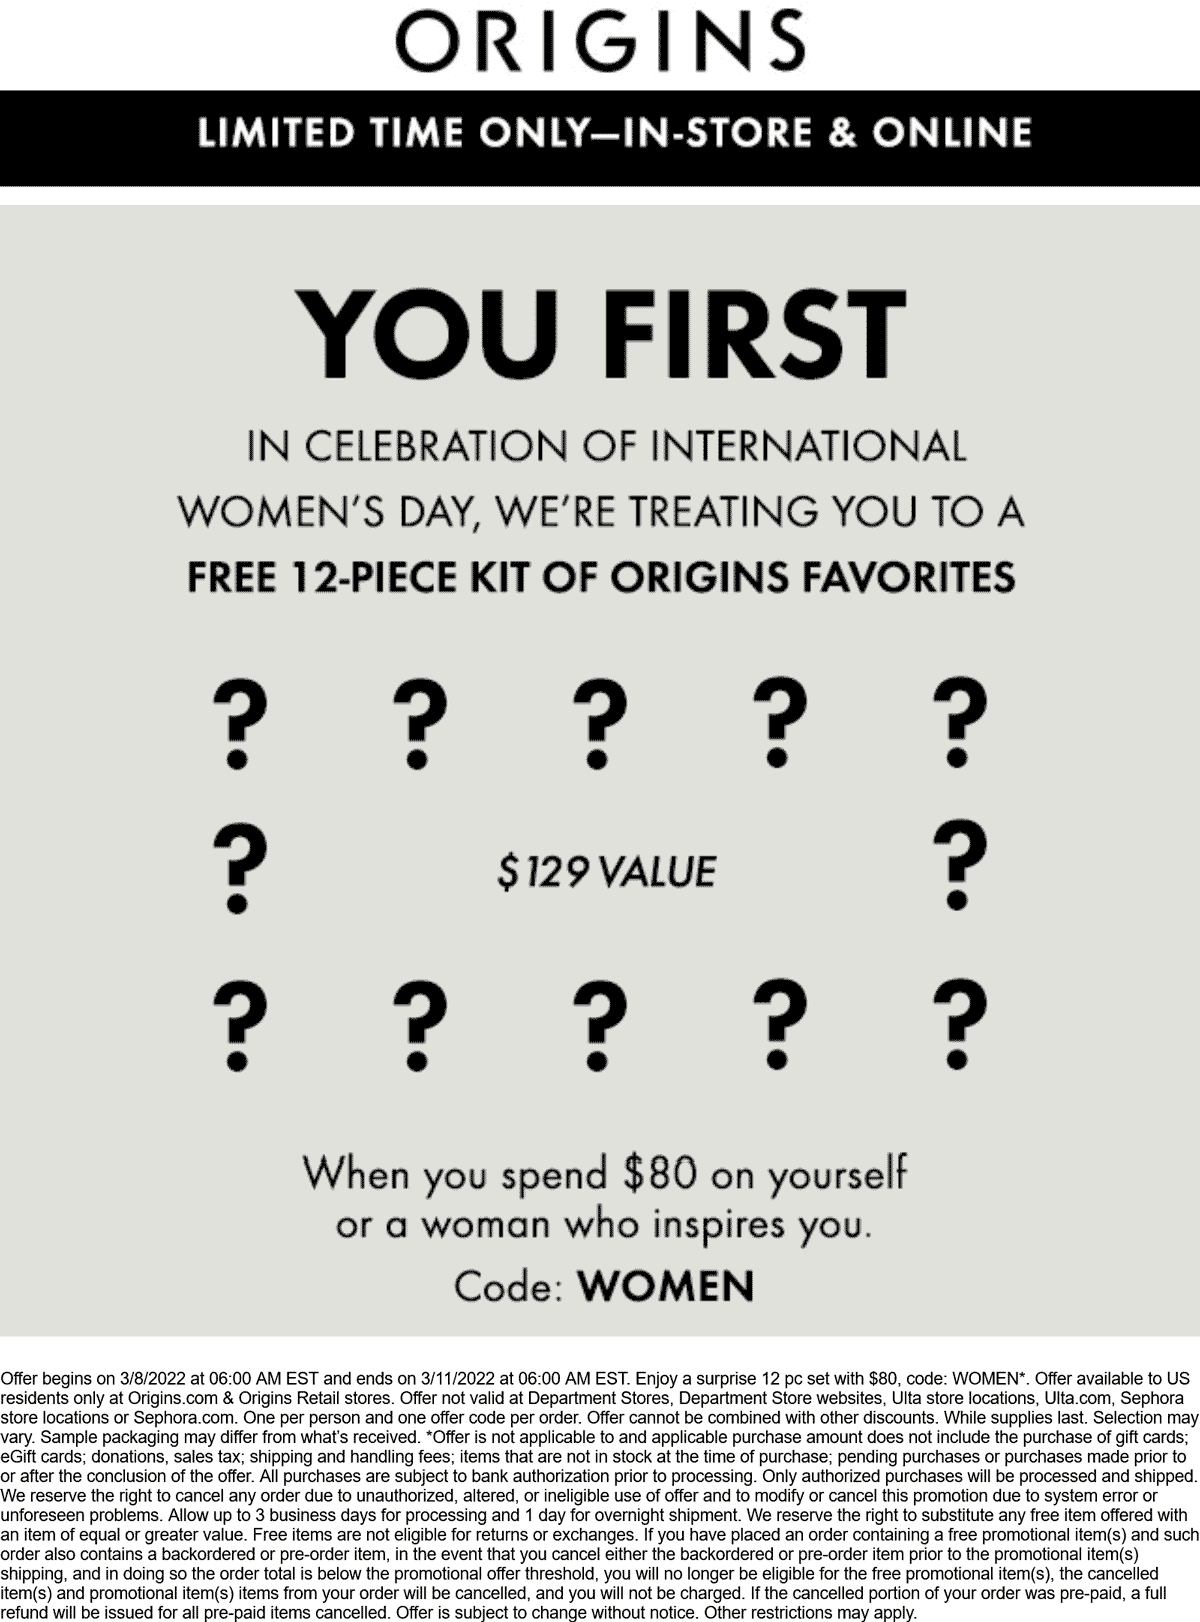 Origins stores Coupon  Free 12pc set with $80 spent at Origins, or online via promo code WOMEN #origins 